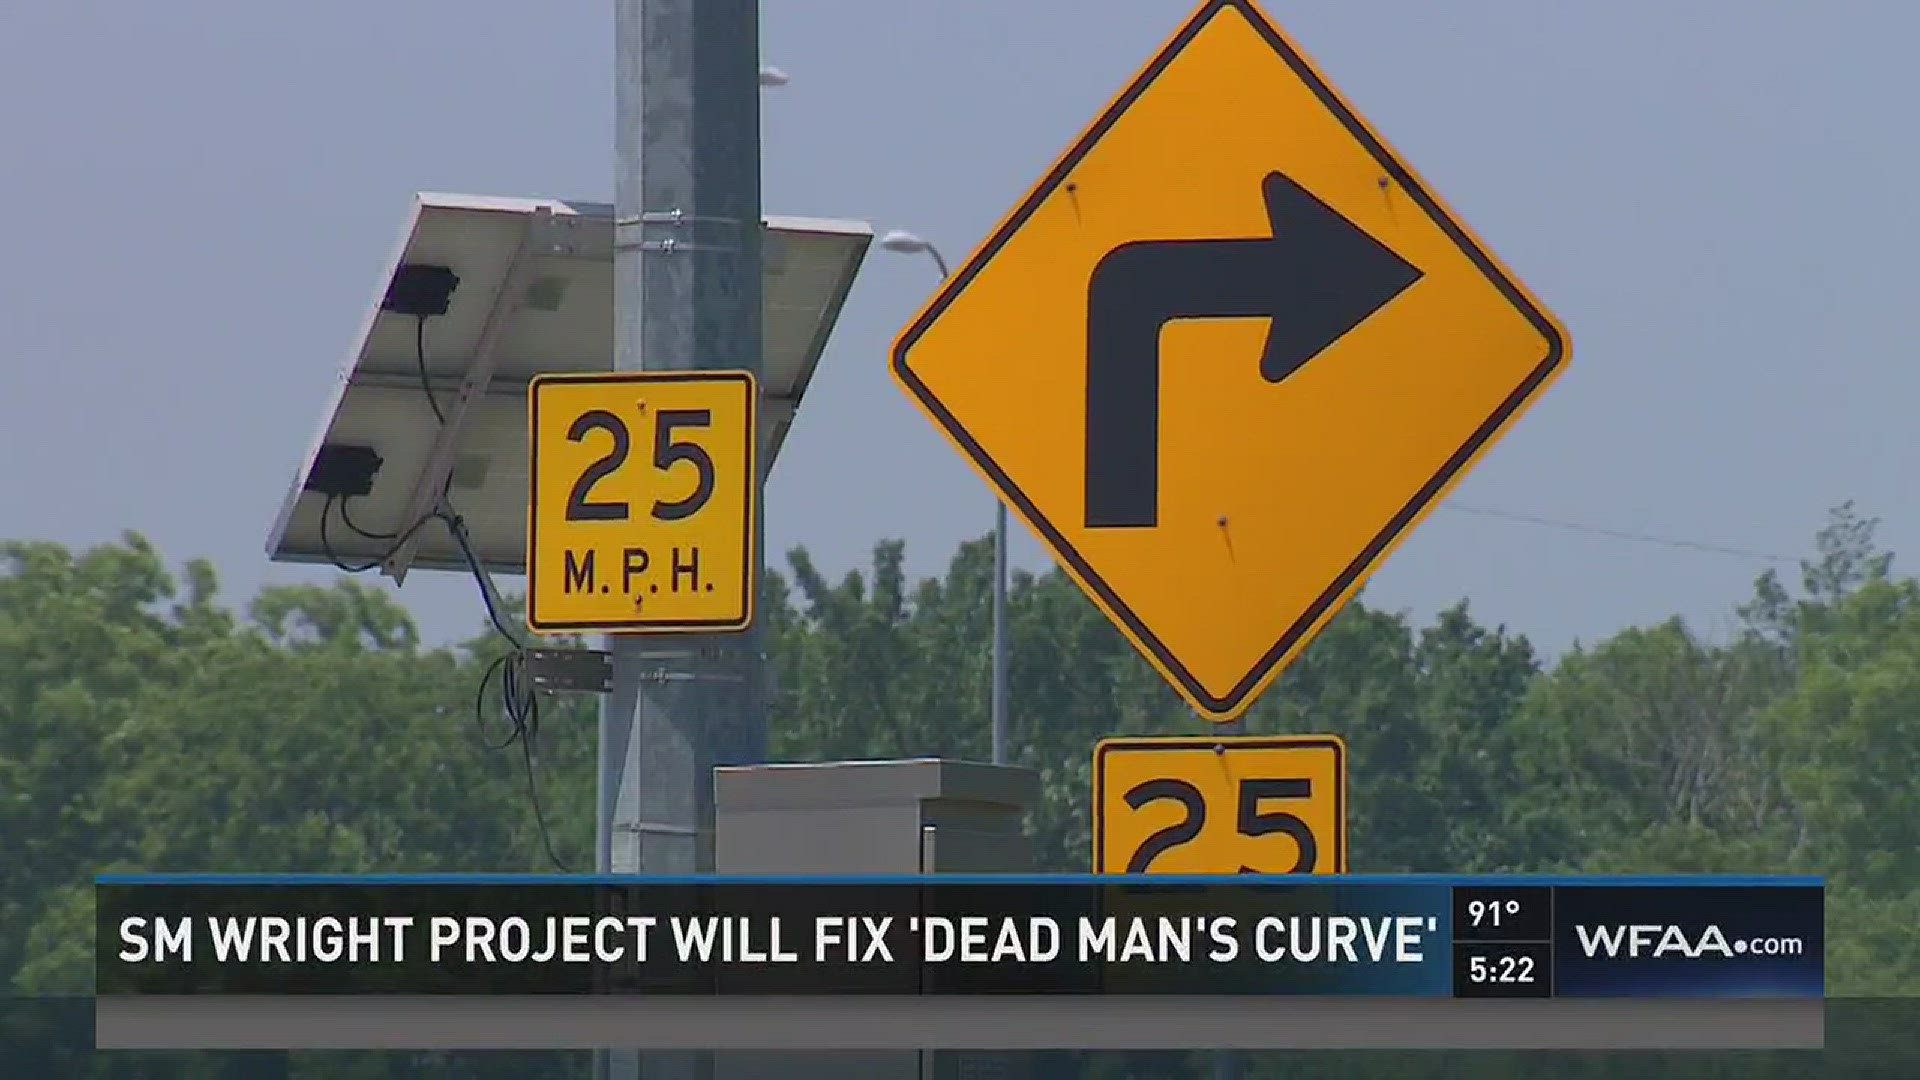 SM Wright project will fix 'Dead Man's Curve'